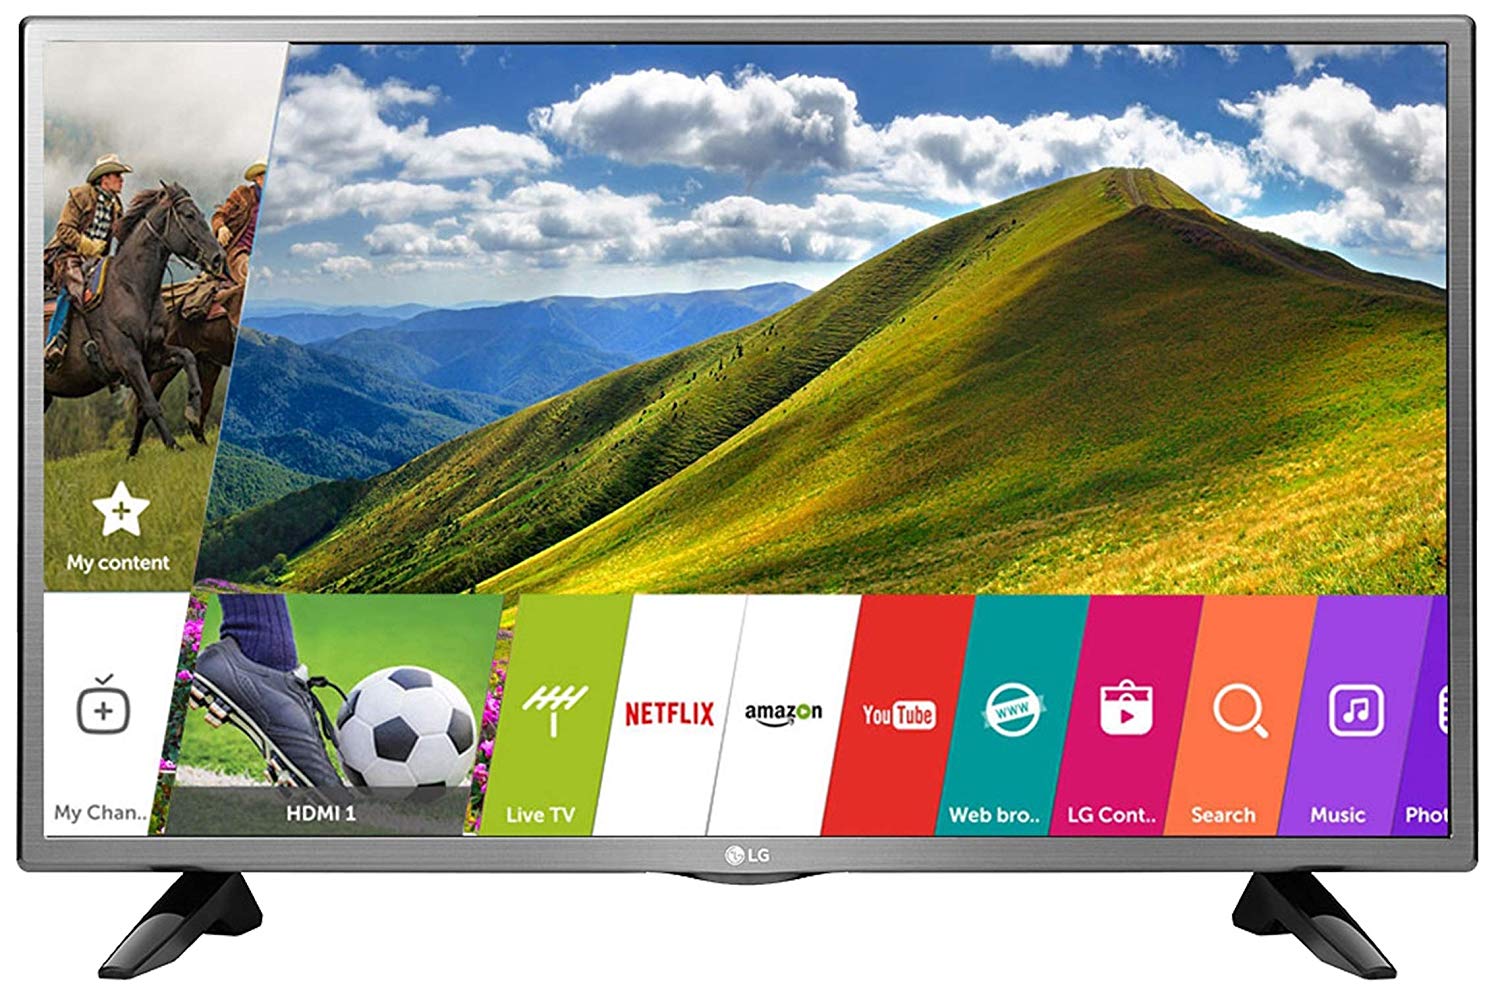 LG 80 cm (32 Inches) HD LED Smart TV 32LJ573D (Silver) (2017 model) on ...